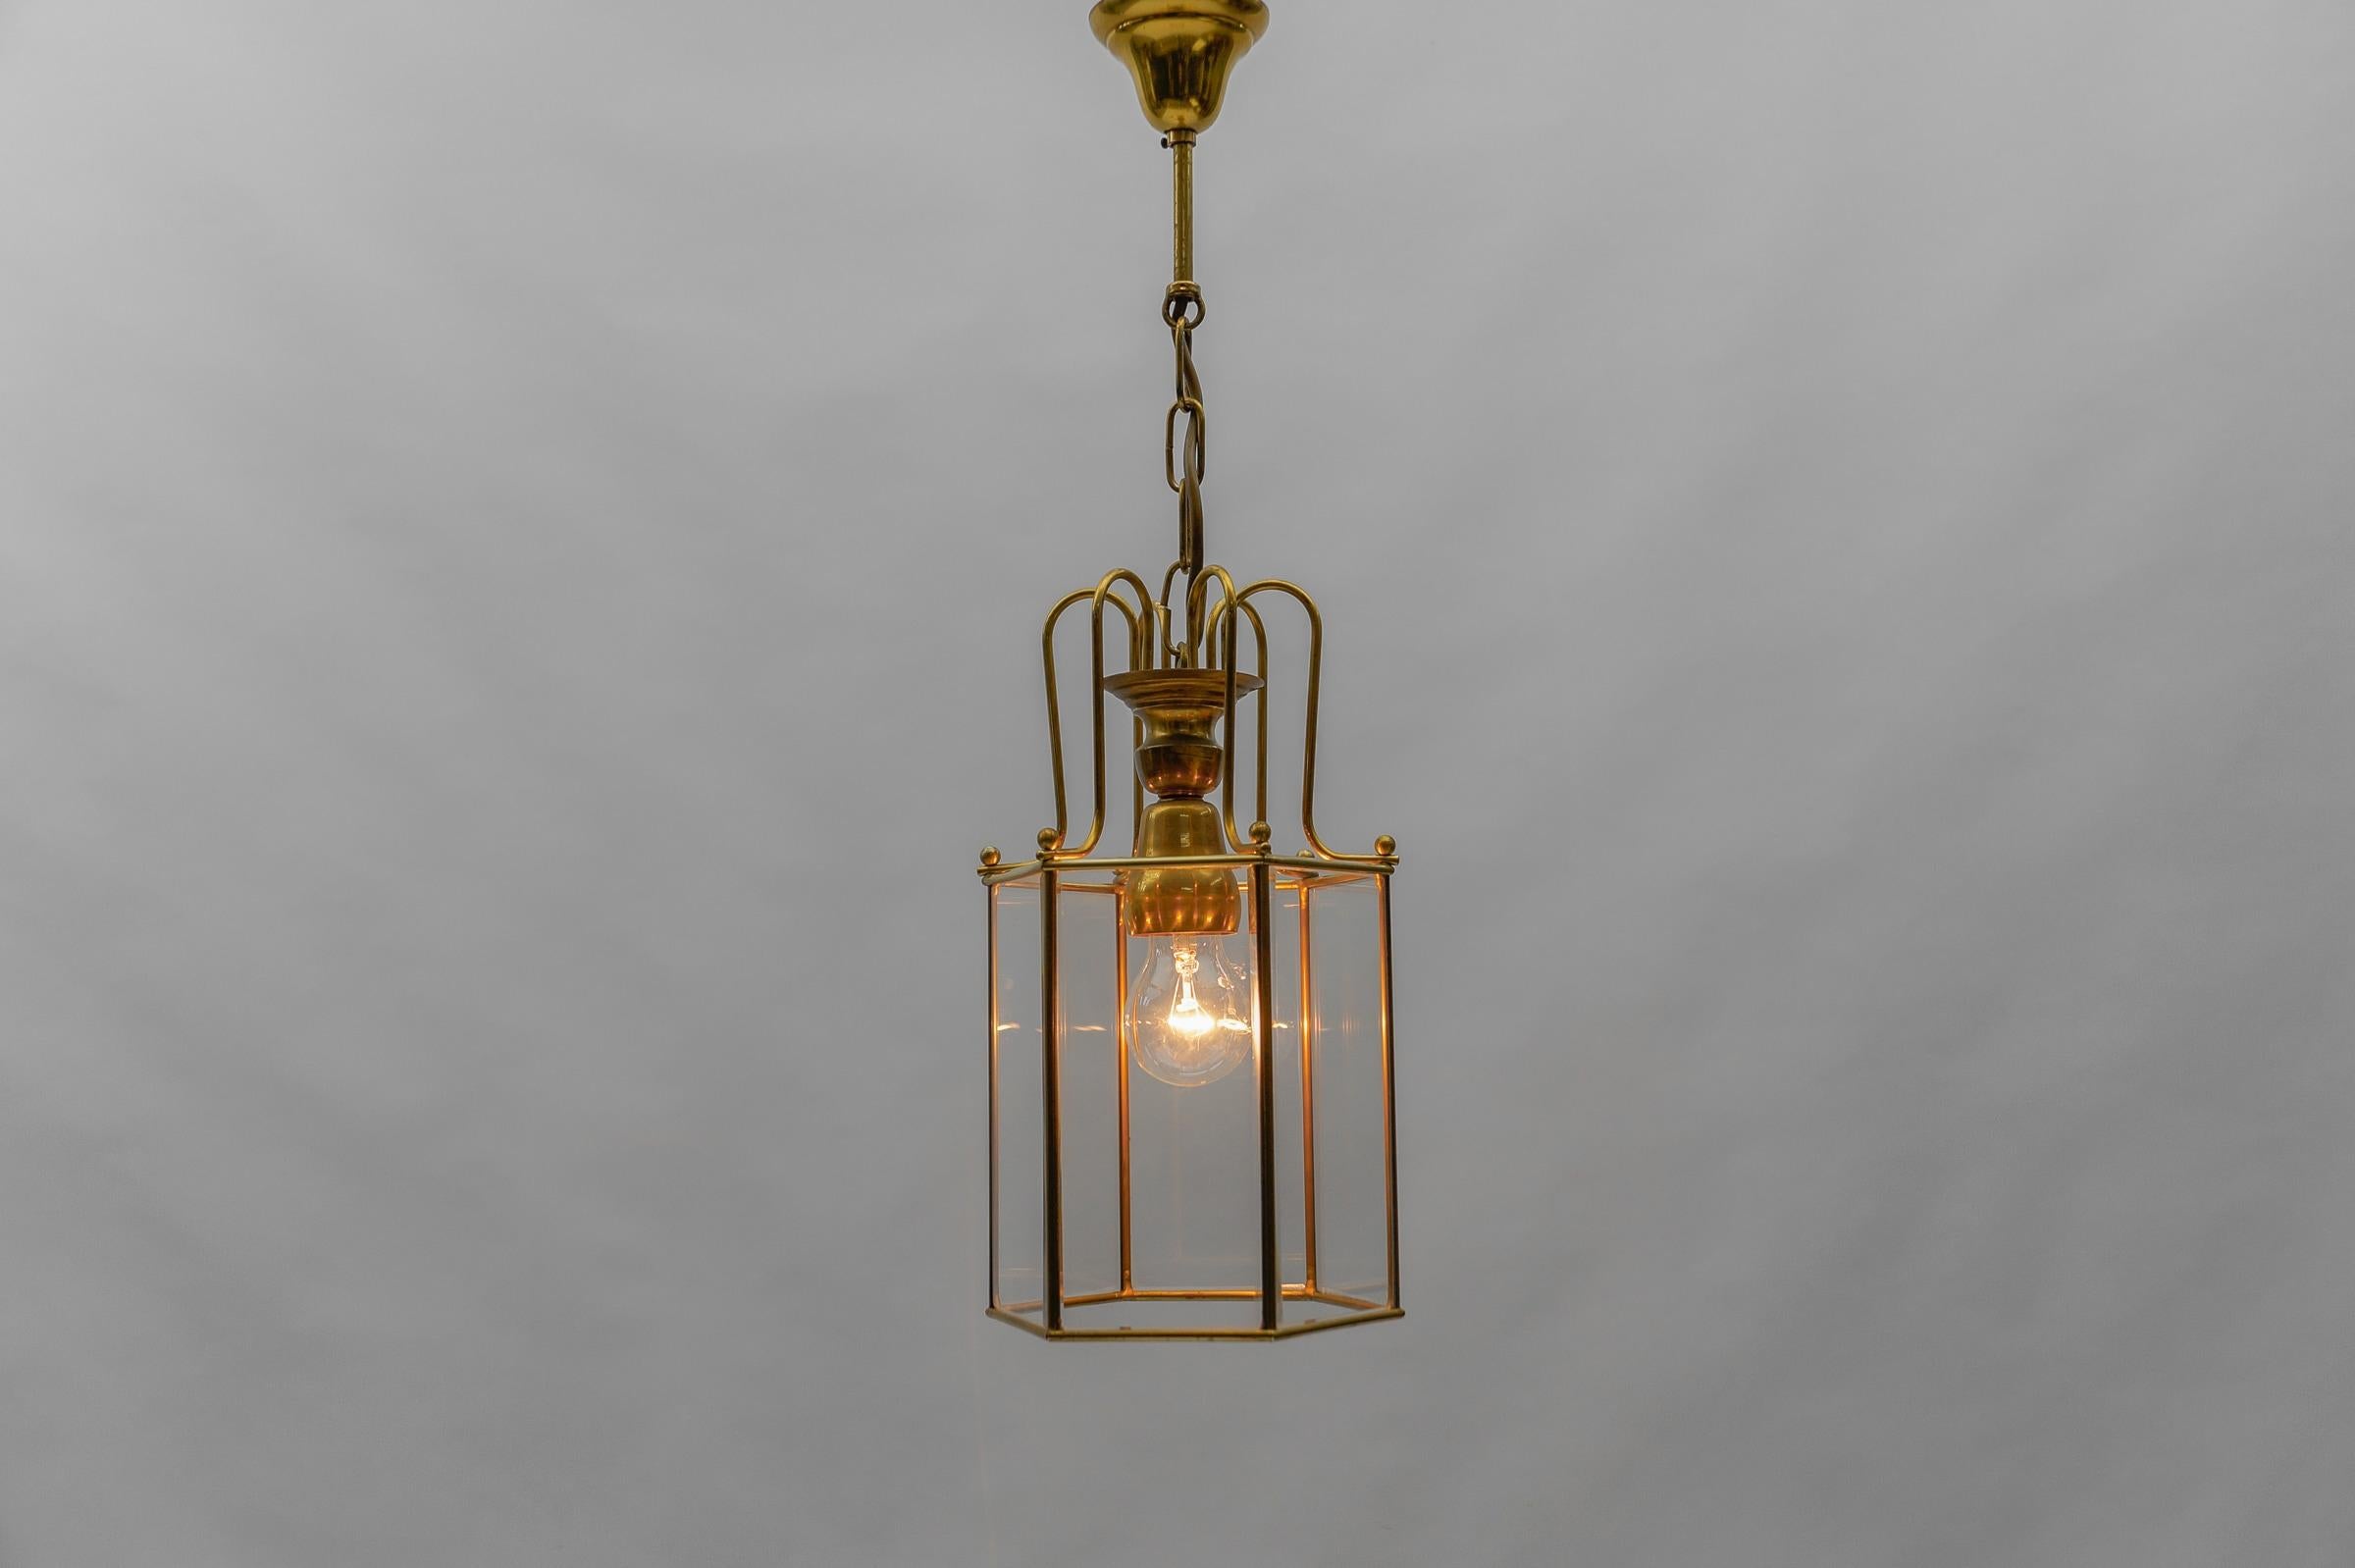 Mid-Century Modern Art Deco Cut Glass Pendant Lamp in Brass, 1940s / 1950s For Sale